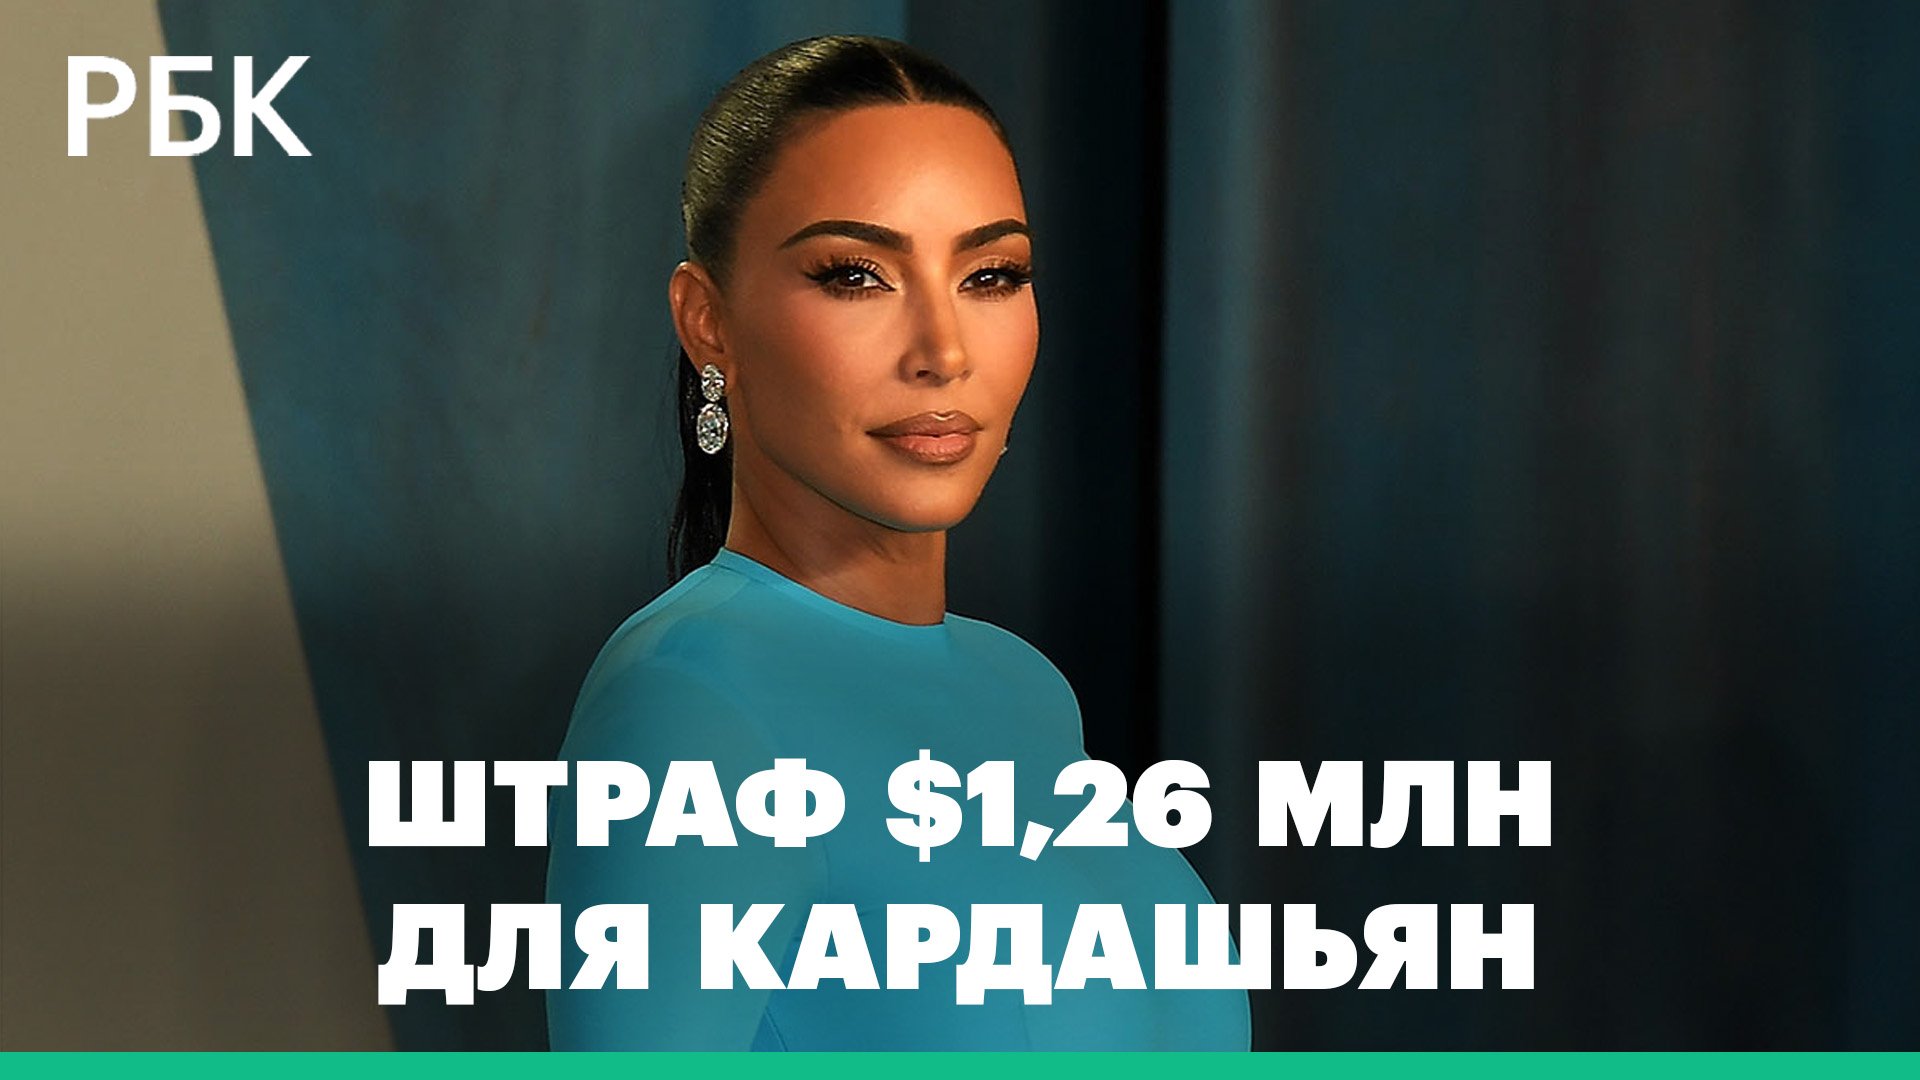 Ким Кардашьян оштрафовали почти на $1,3 млн за рекламу криптовалют